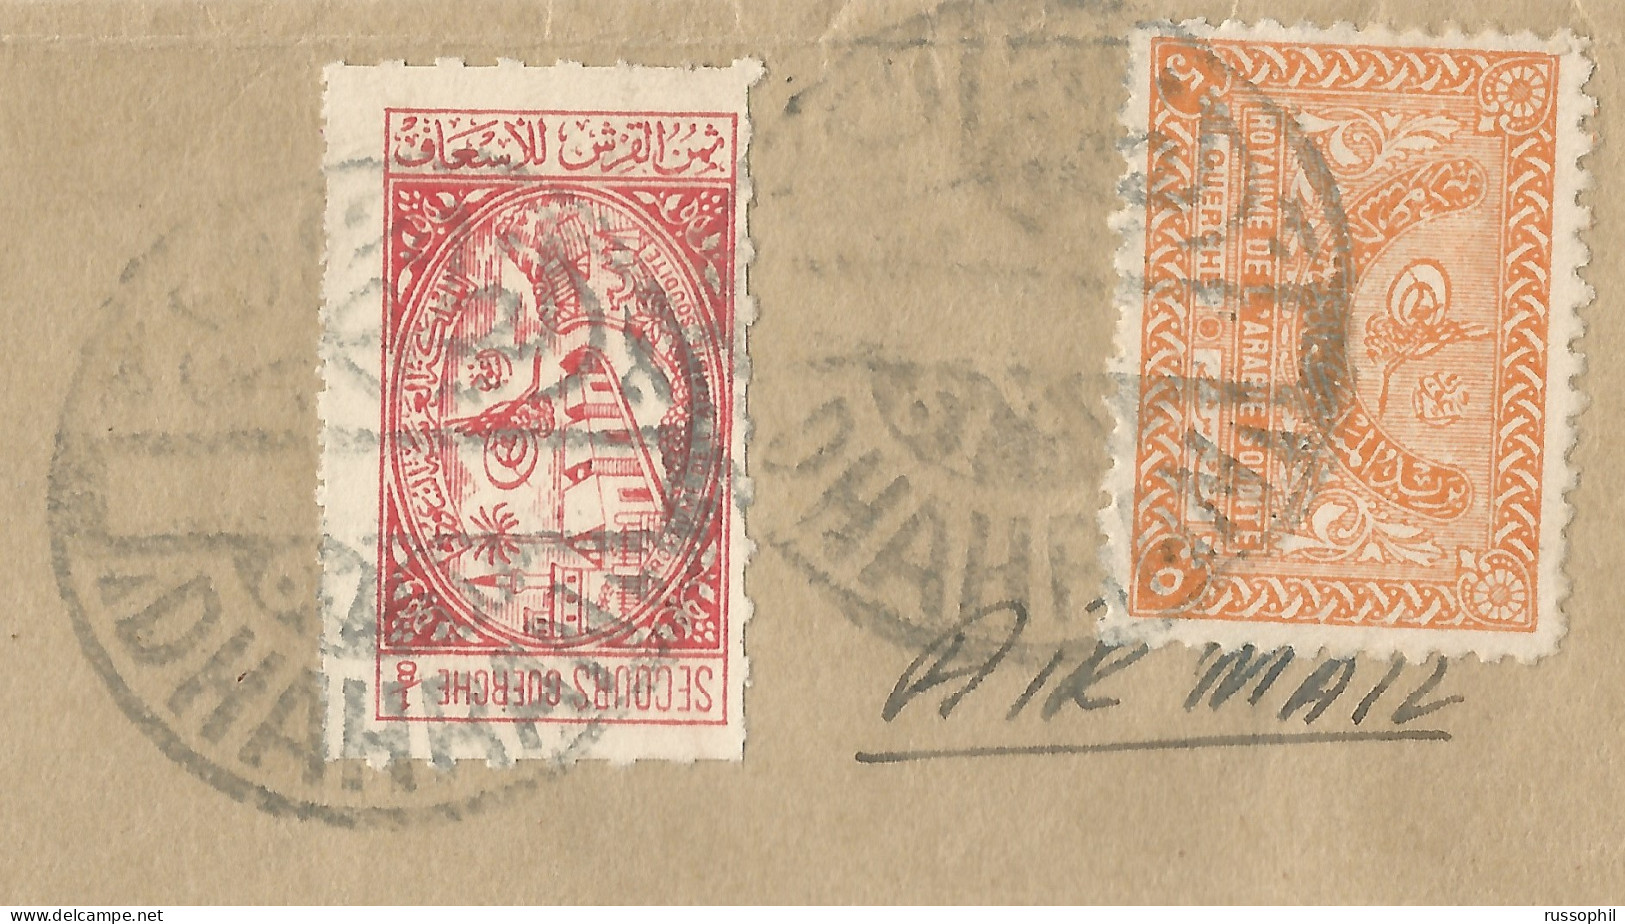 SAUDI ARABIA - 5 G. FRANKING (Mi #19 ALONE) FRANKING COVER FROM DAHRAN TO THE USA - EARLY 1950s - Arabie Saoudite